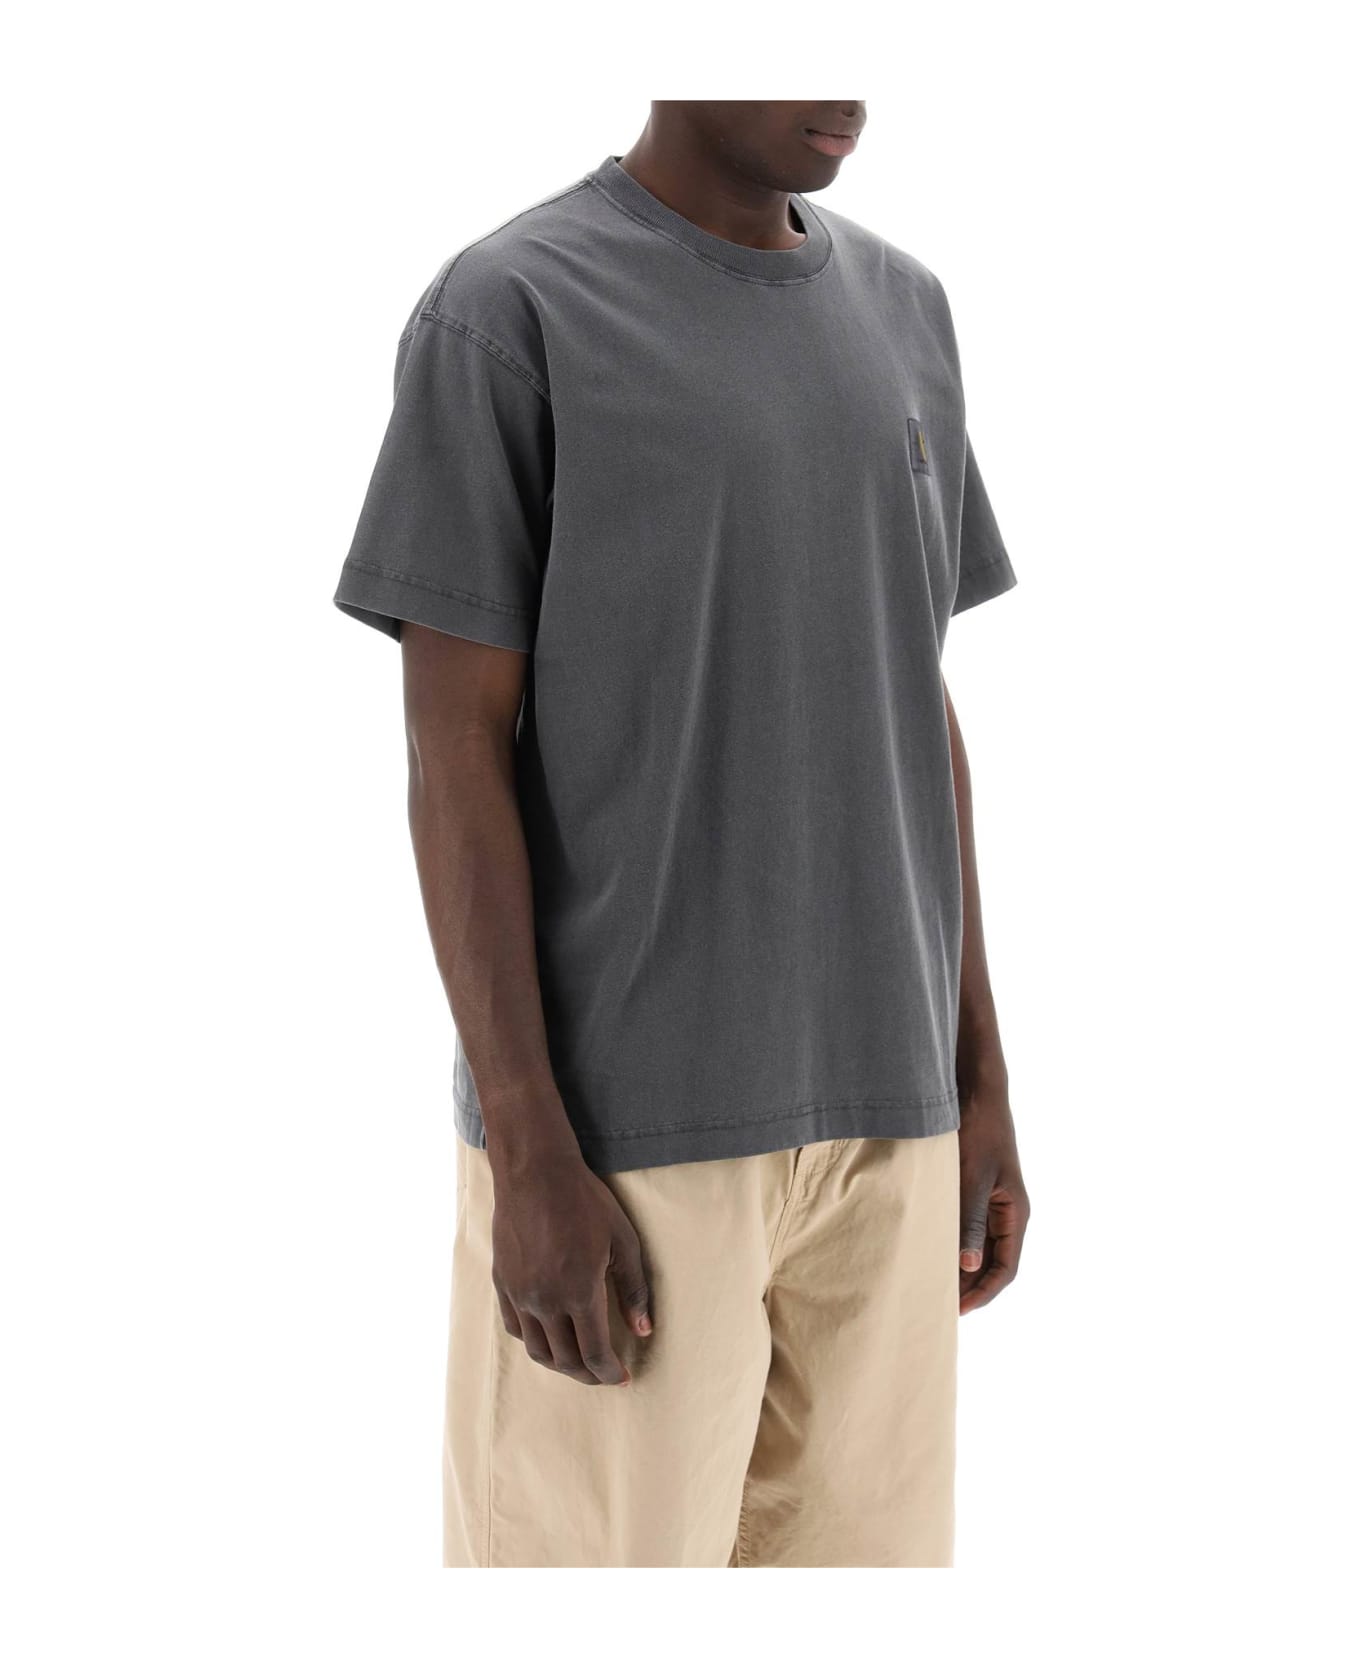 Carhartt Dark Grey Cotton Oversize S/s Nelson T-shirt - CHARCOAL